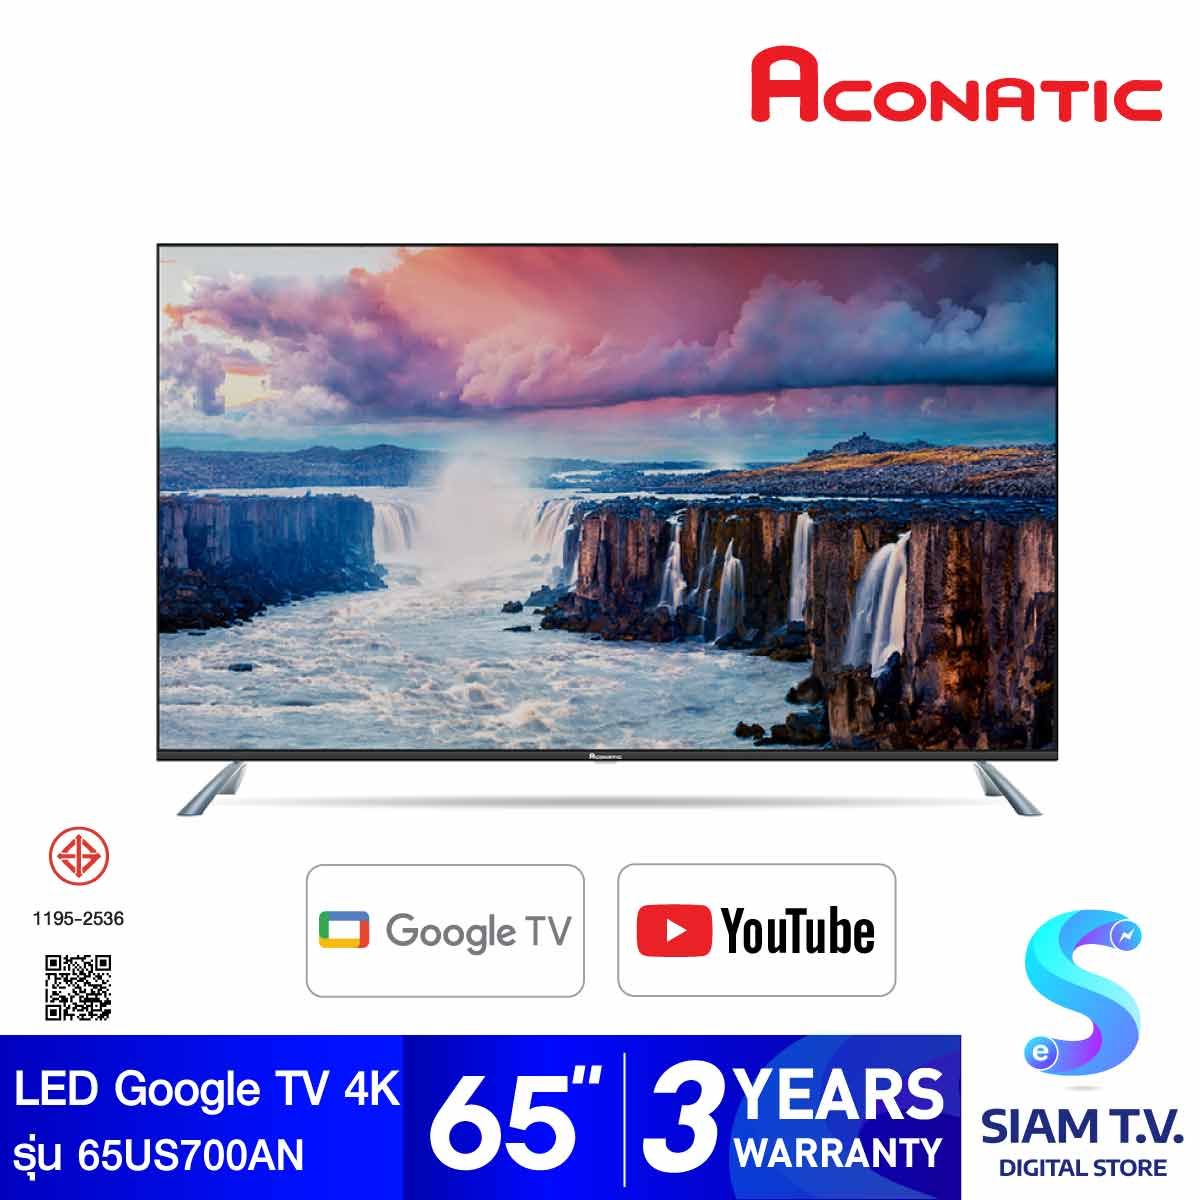 ACONATIC LED Google TV 4K รุ่น 65US700AN สมาร์ททีวี ขนาด 65 นิ้ว Google TV